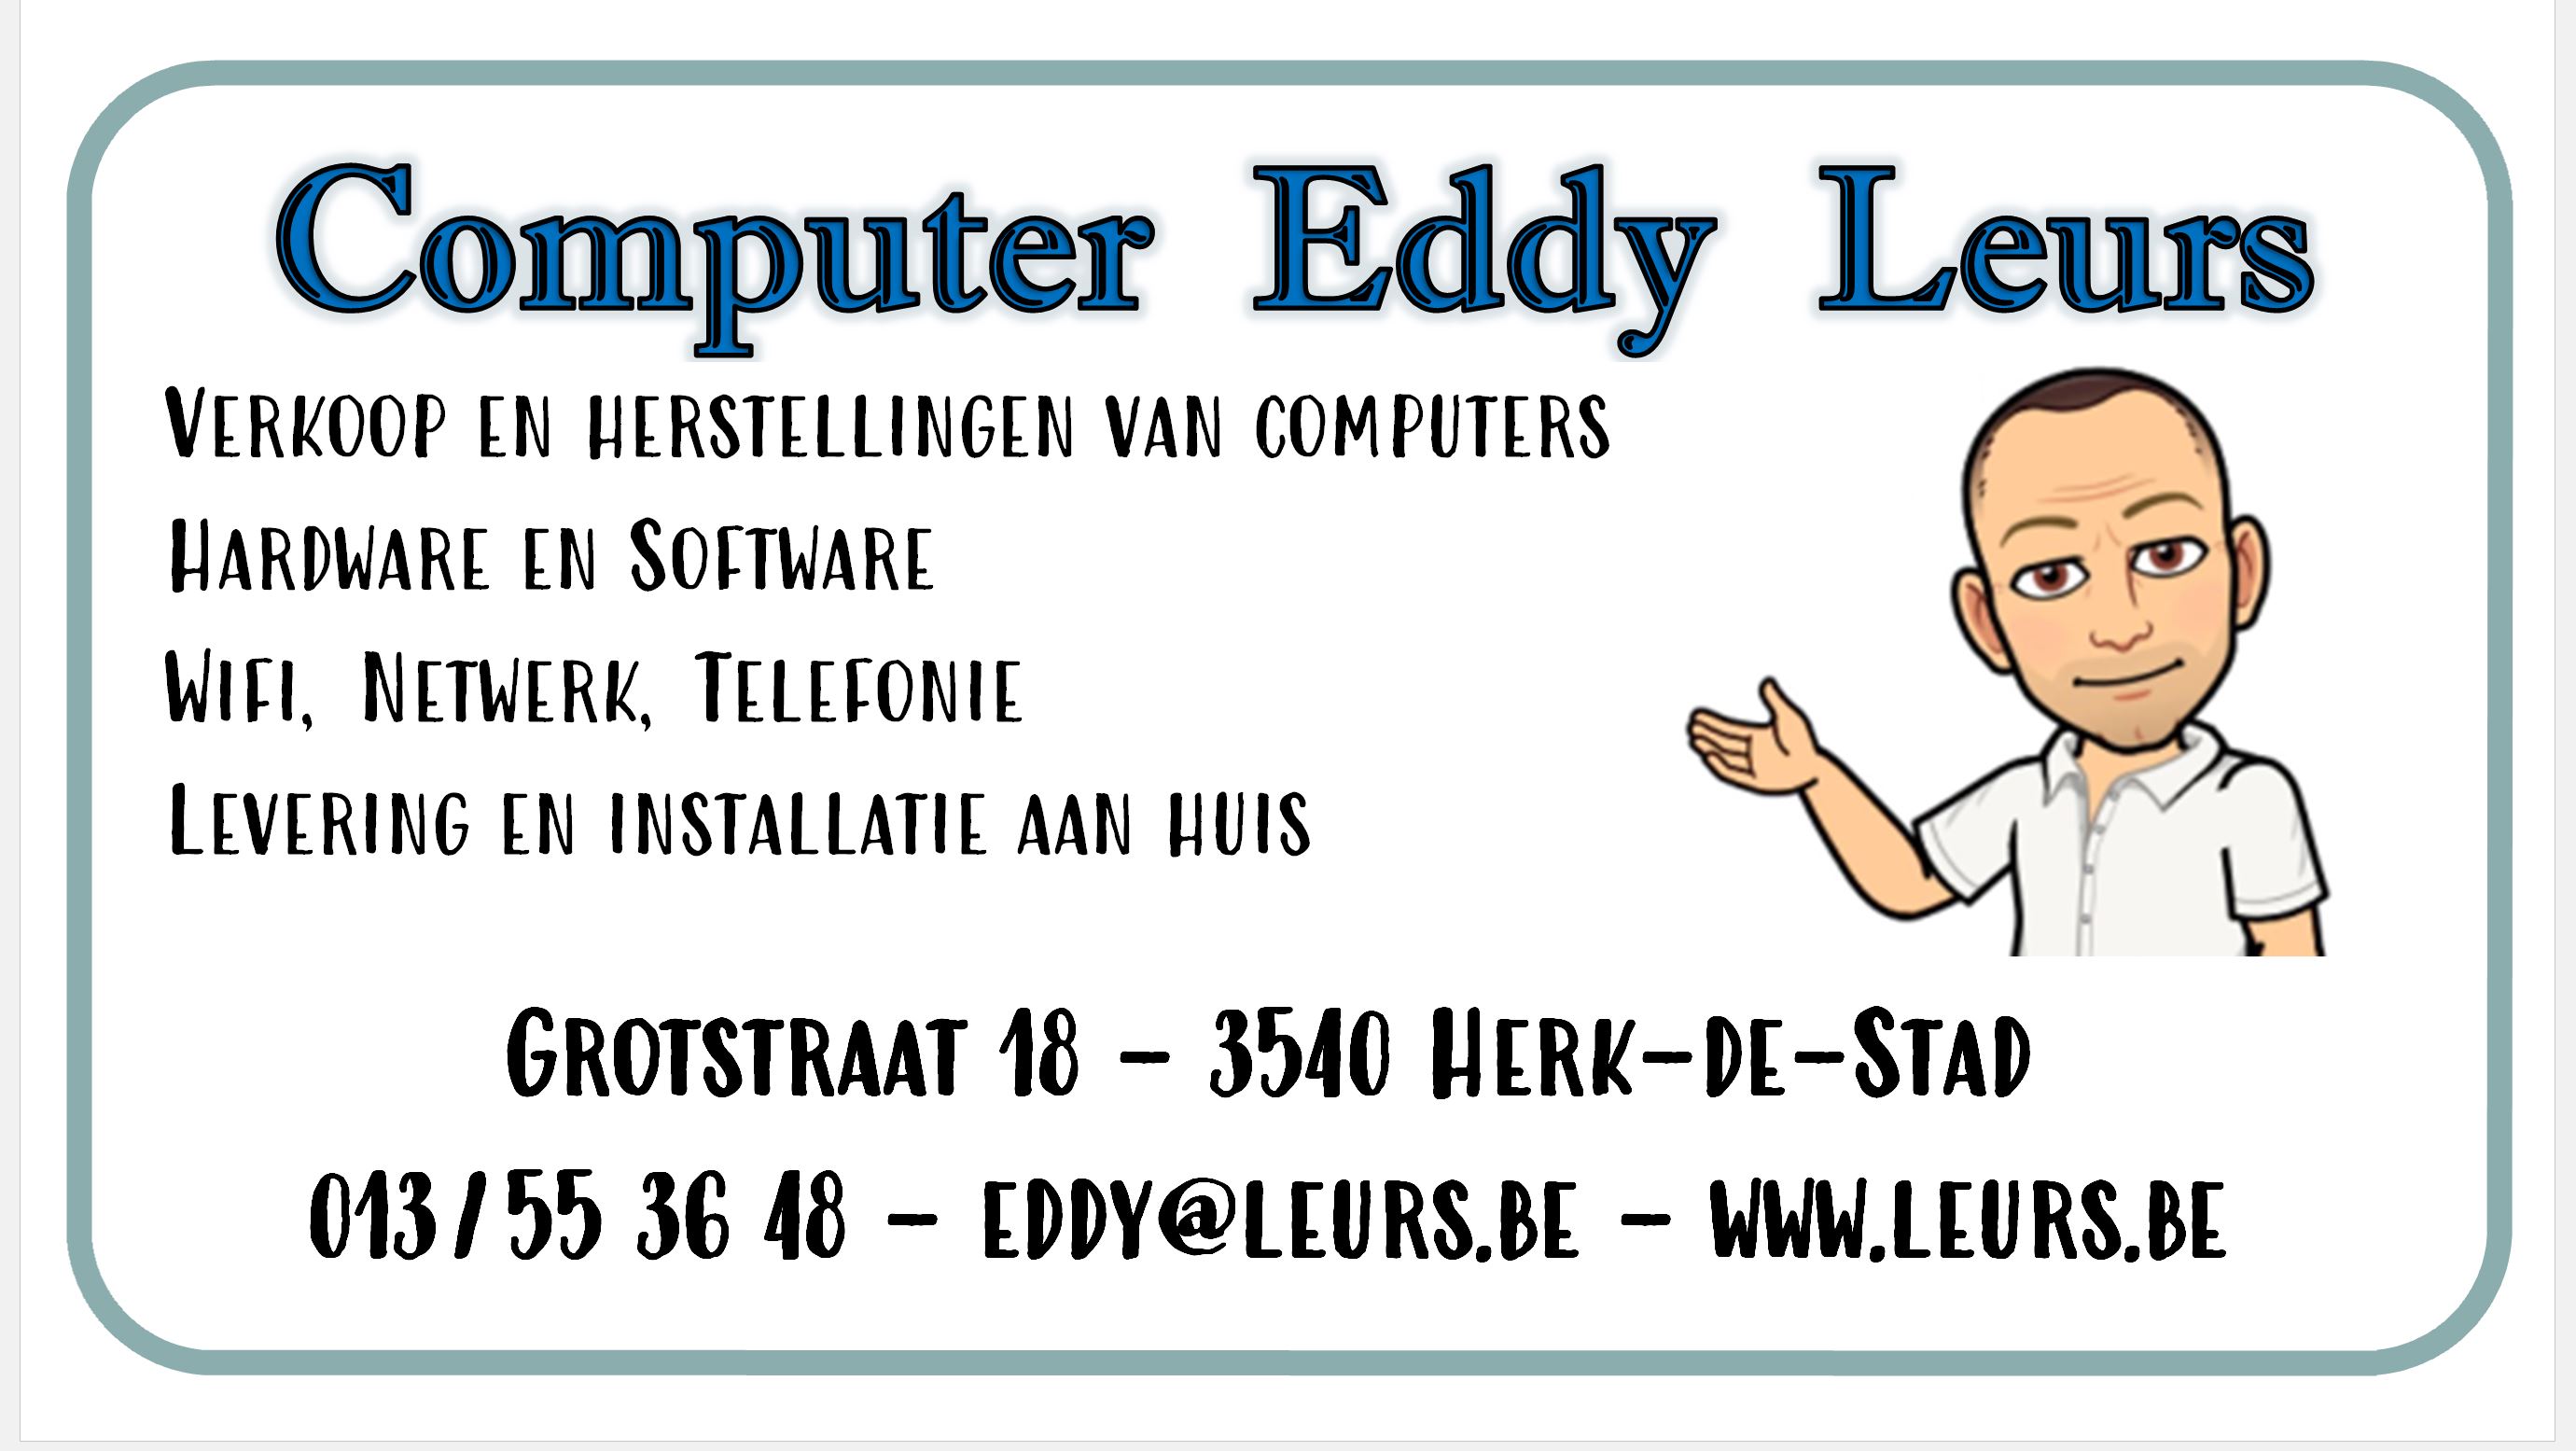 Computer Eddy Leurs